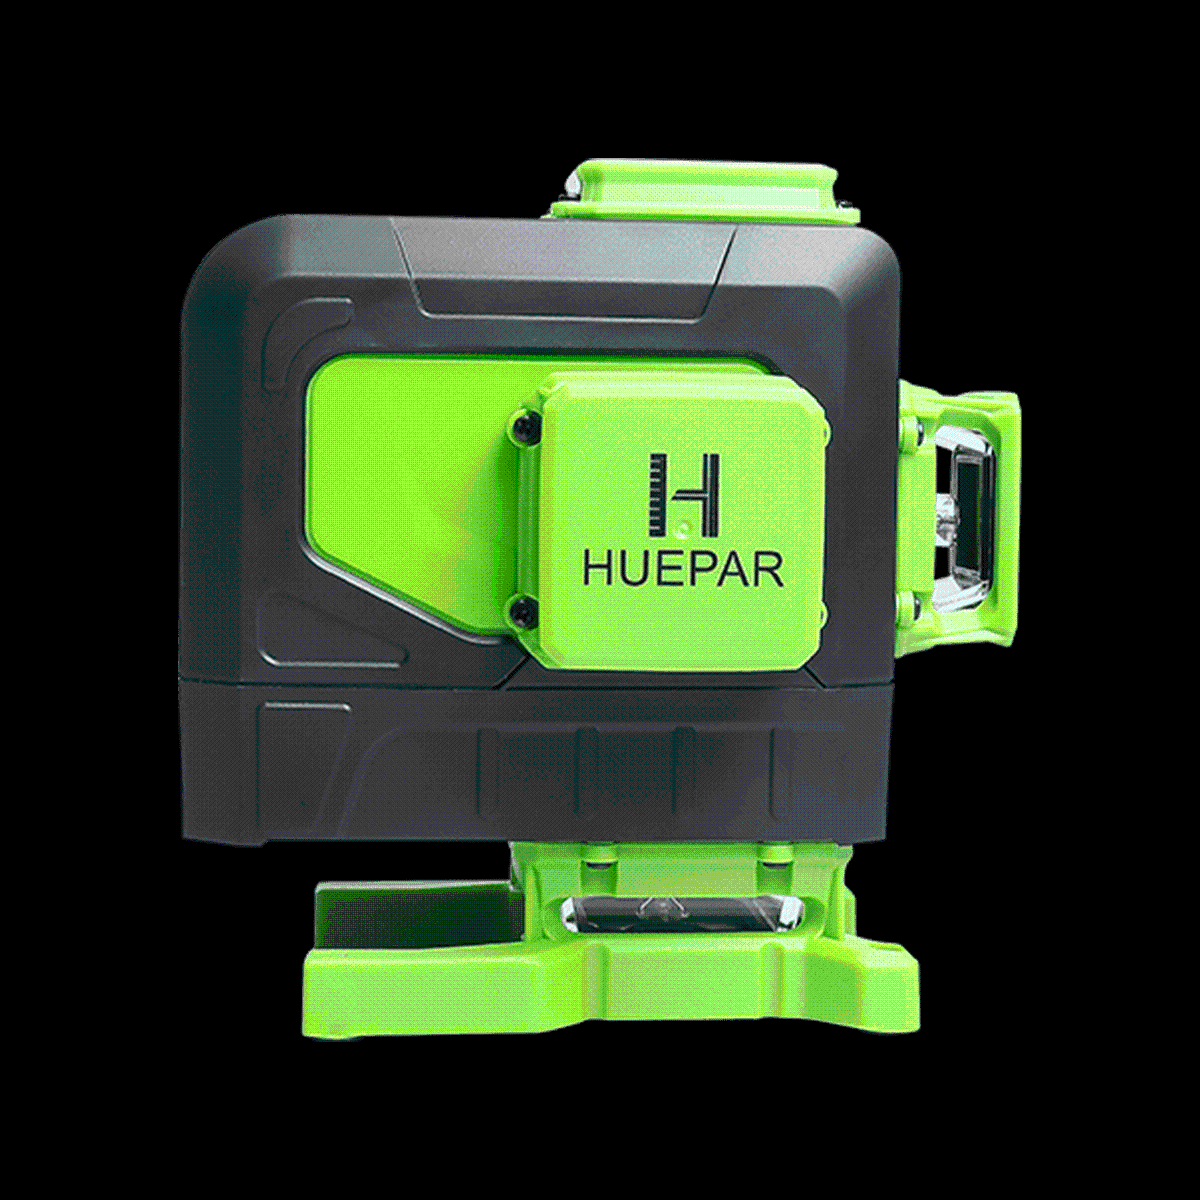 Huepar 3D Cross Line Laser Level 3 x 360° Green Beam Self-leveling Tiling  Floor Laser Level Tools with Remote Control 503DG 